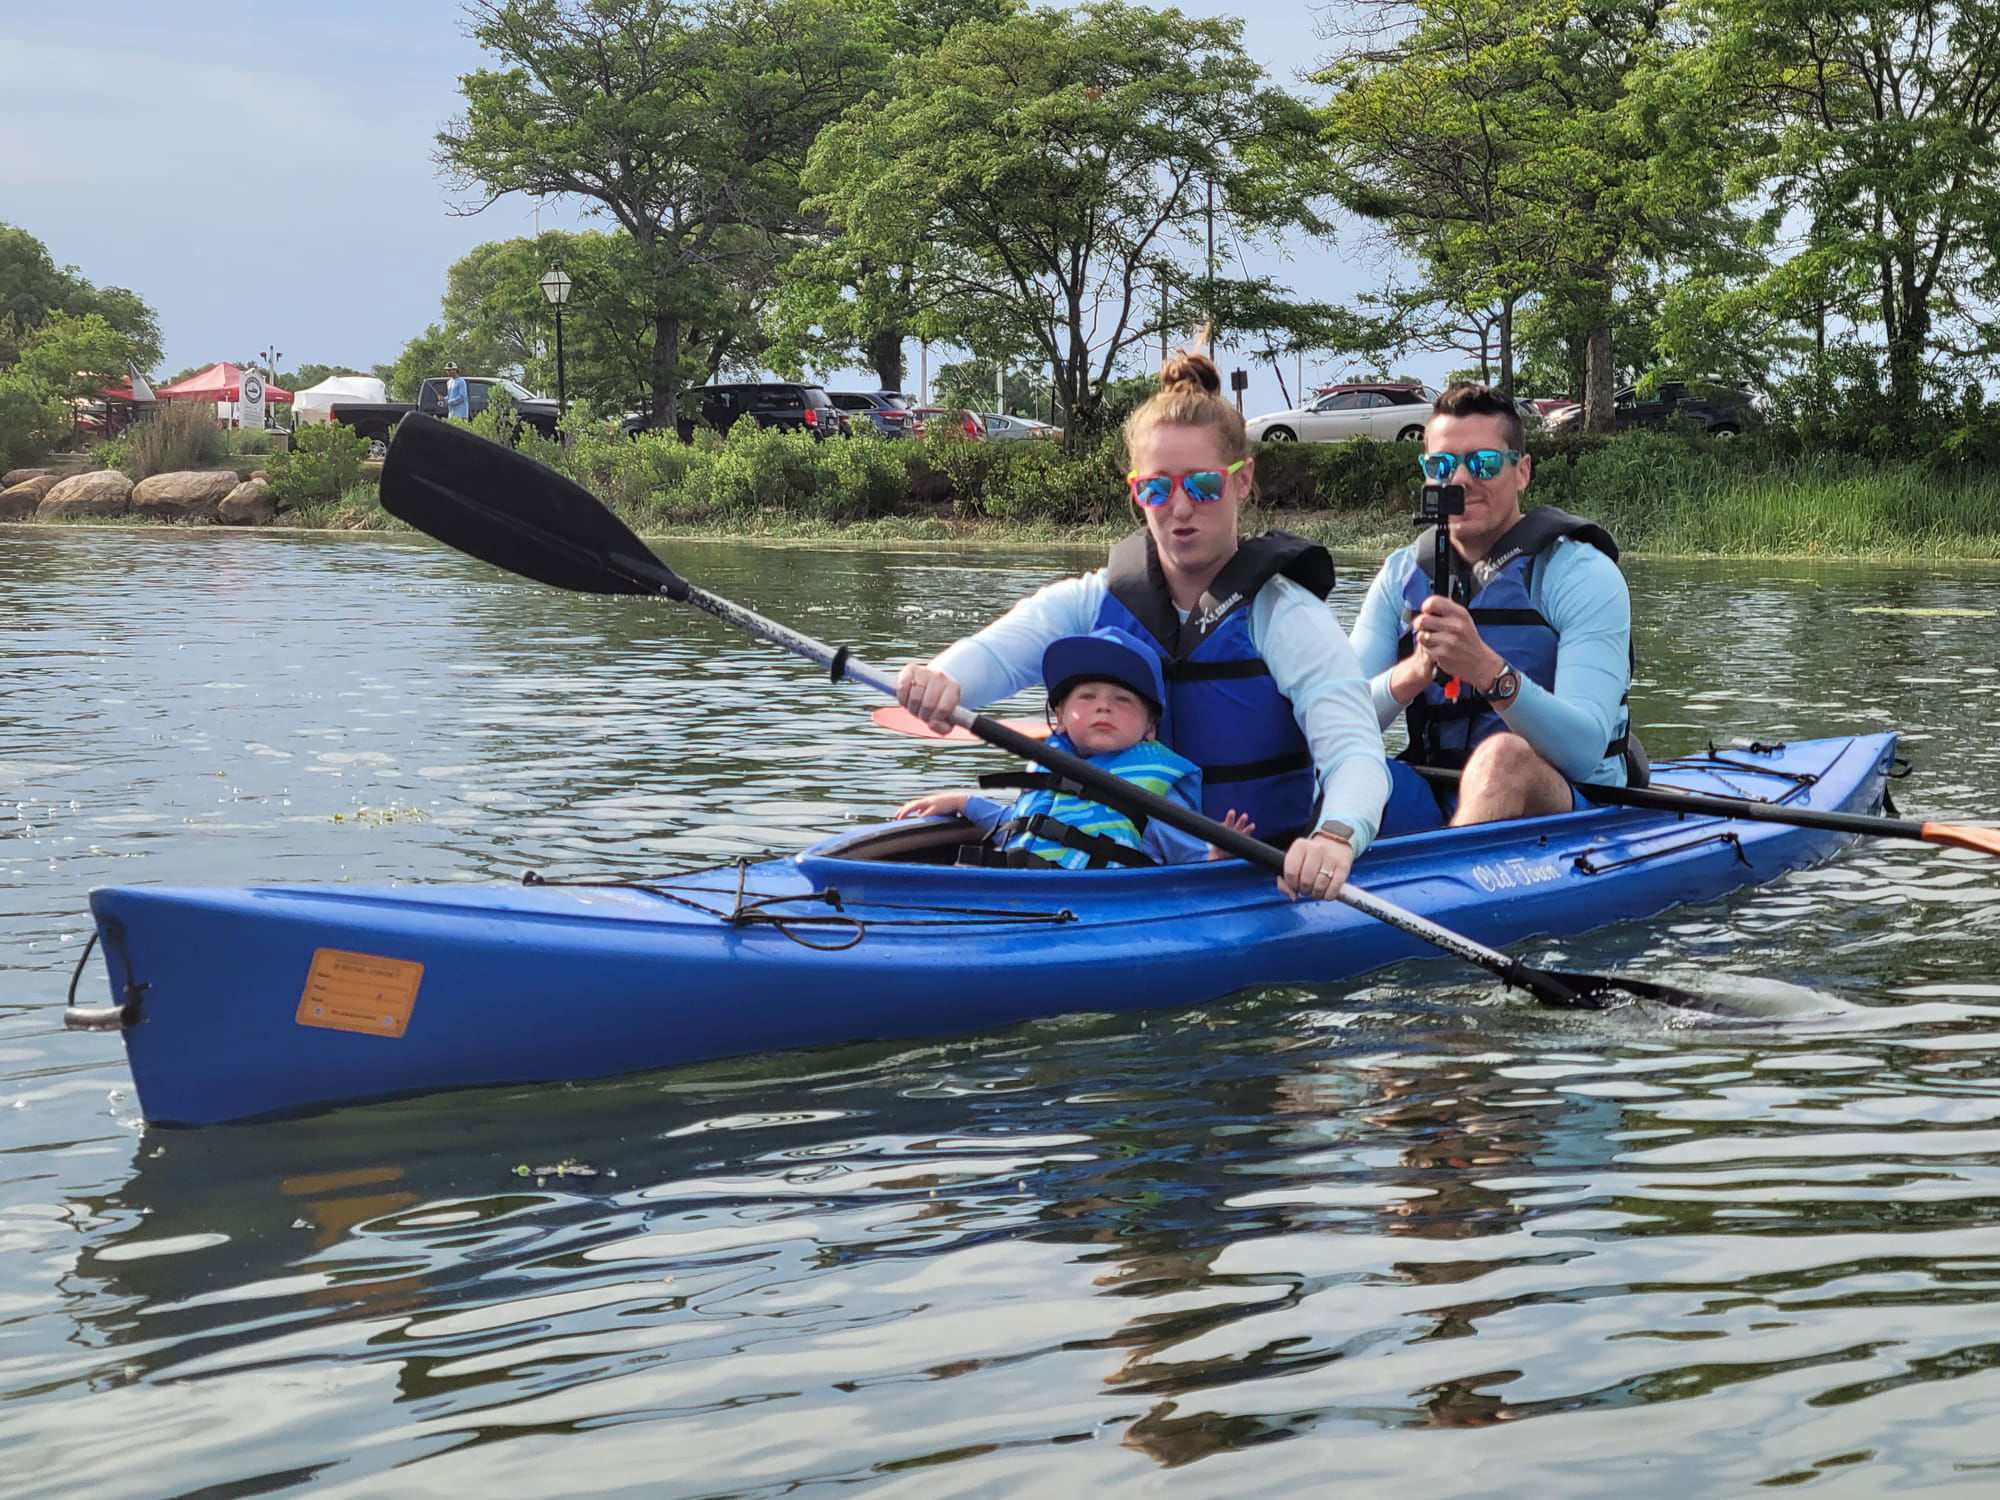 Stony Brook Harbor - 6/18/21 - Jack's First Kayaking Adventure